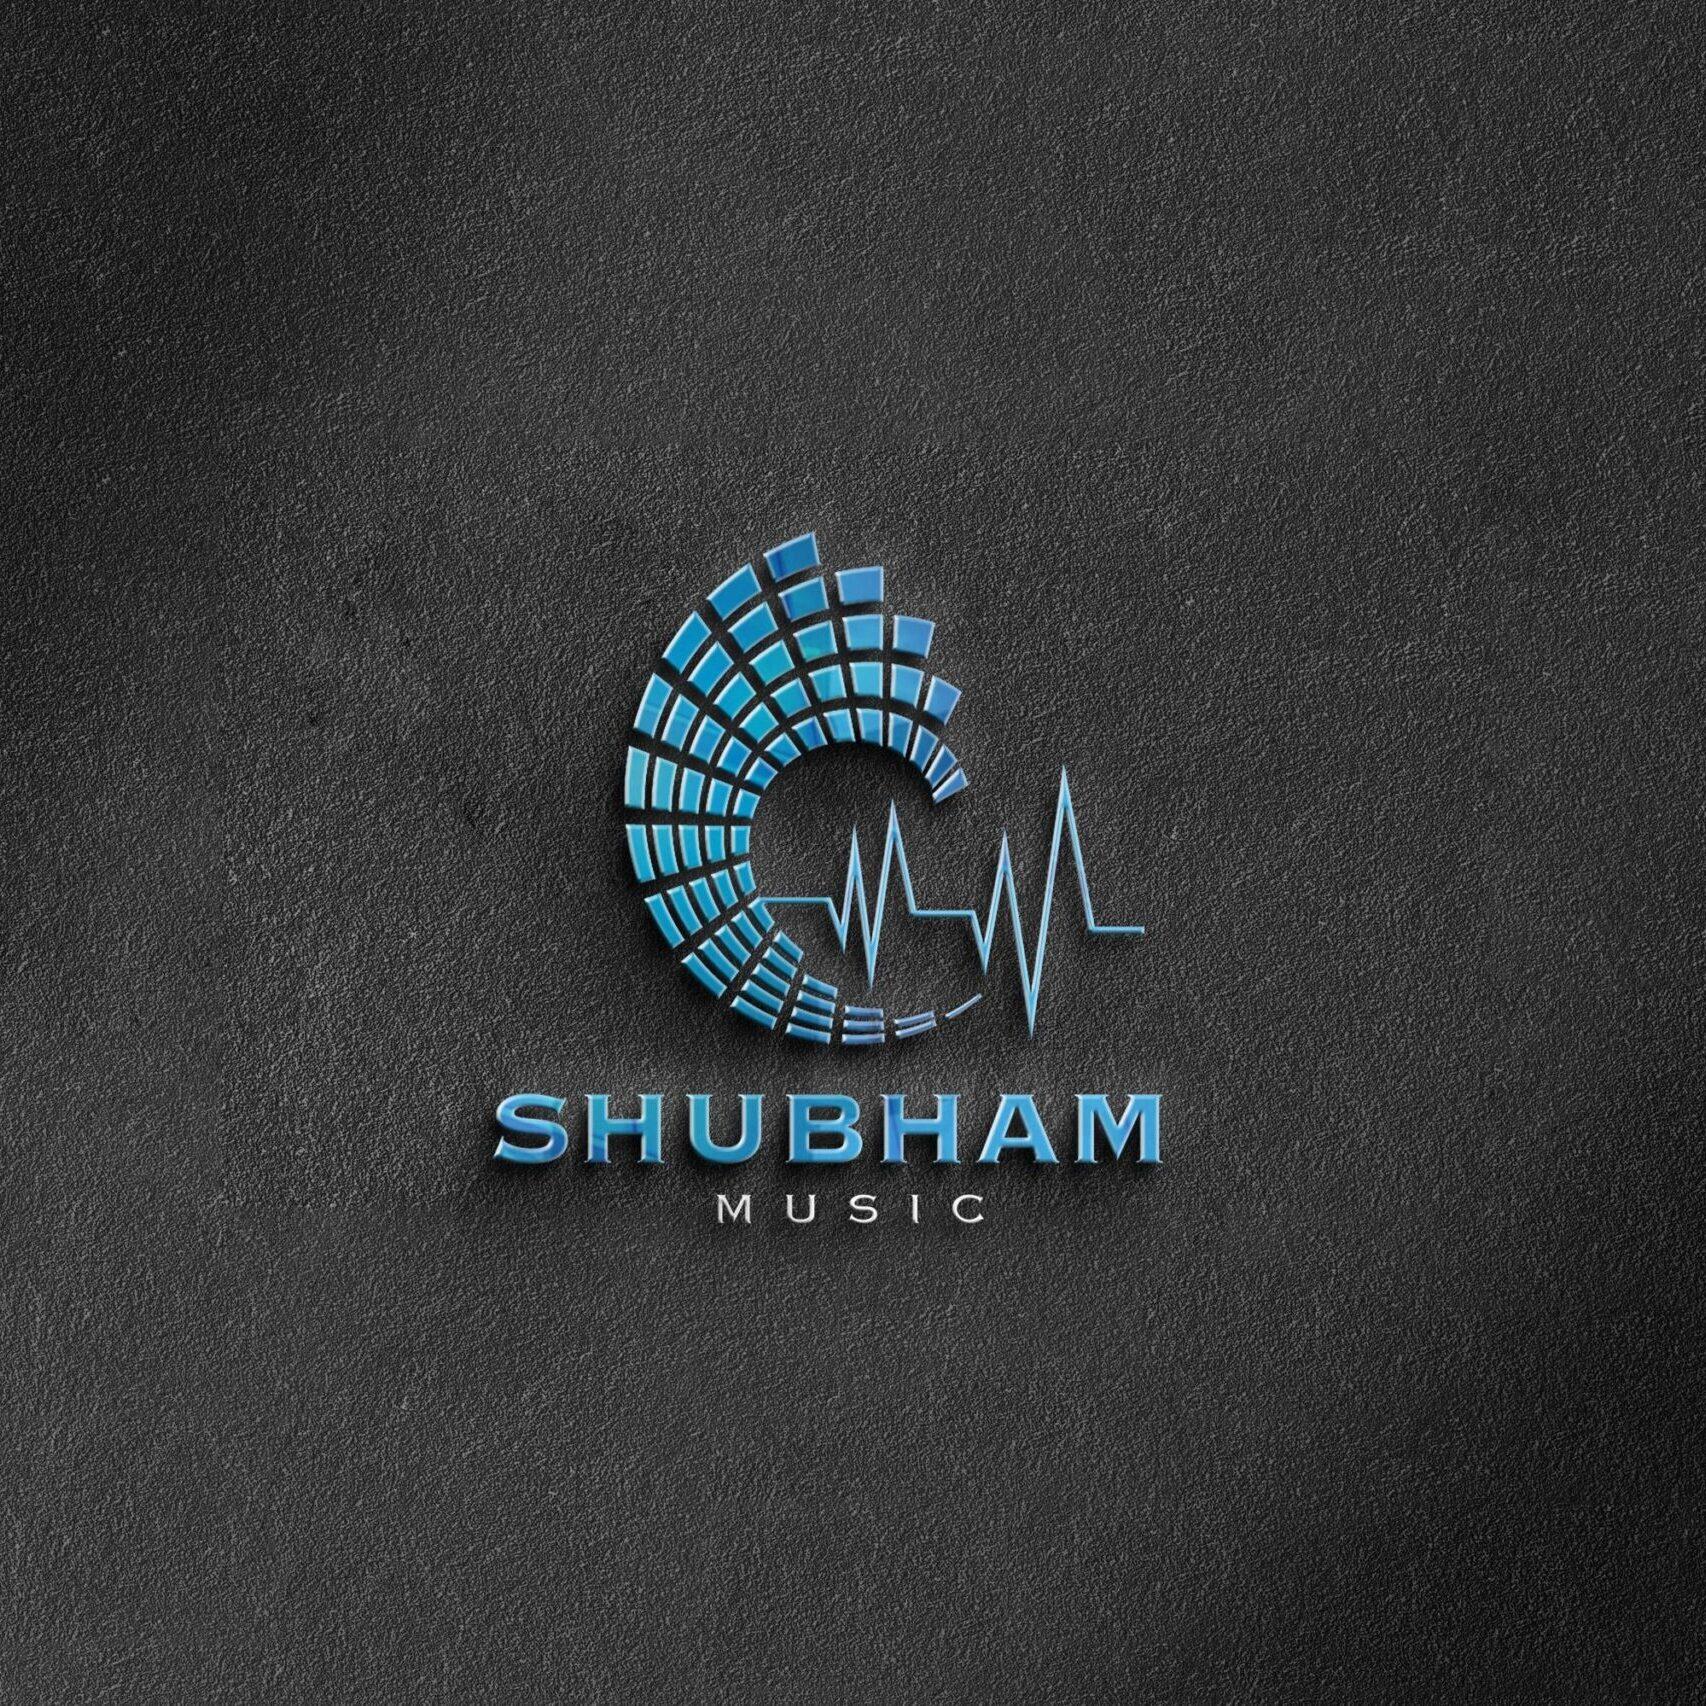 Music company Logo Design, in lucknow